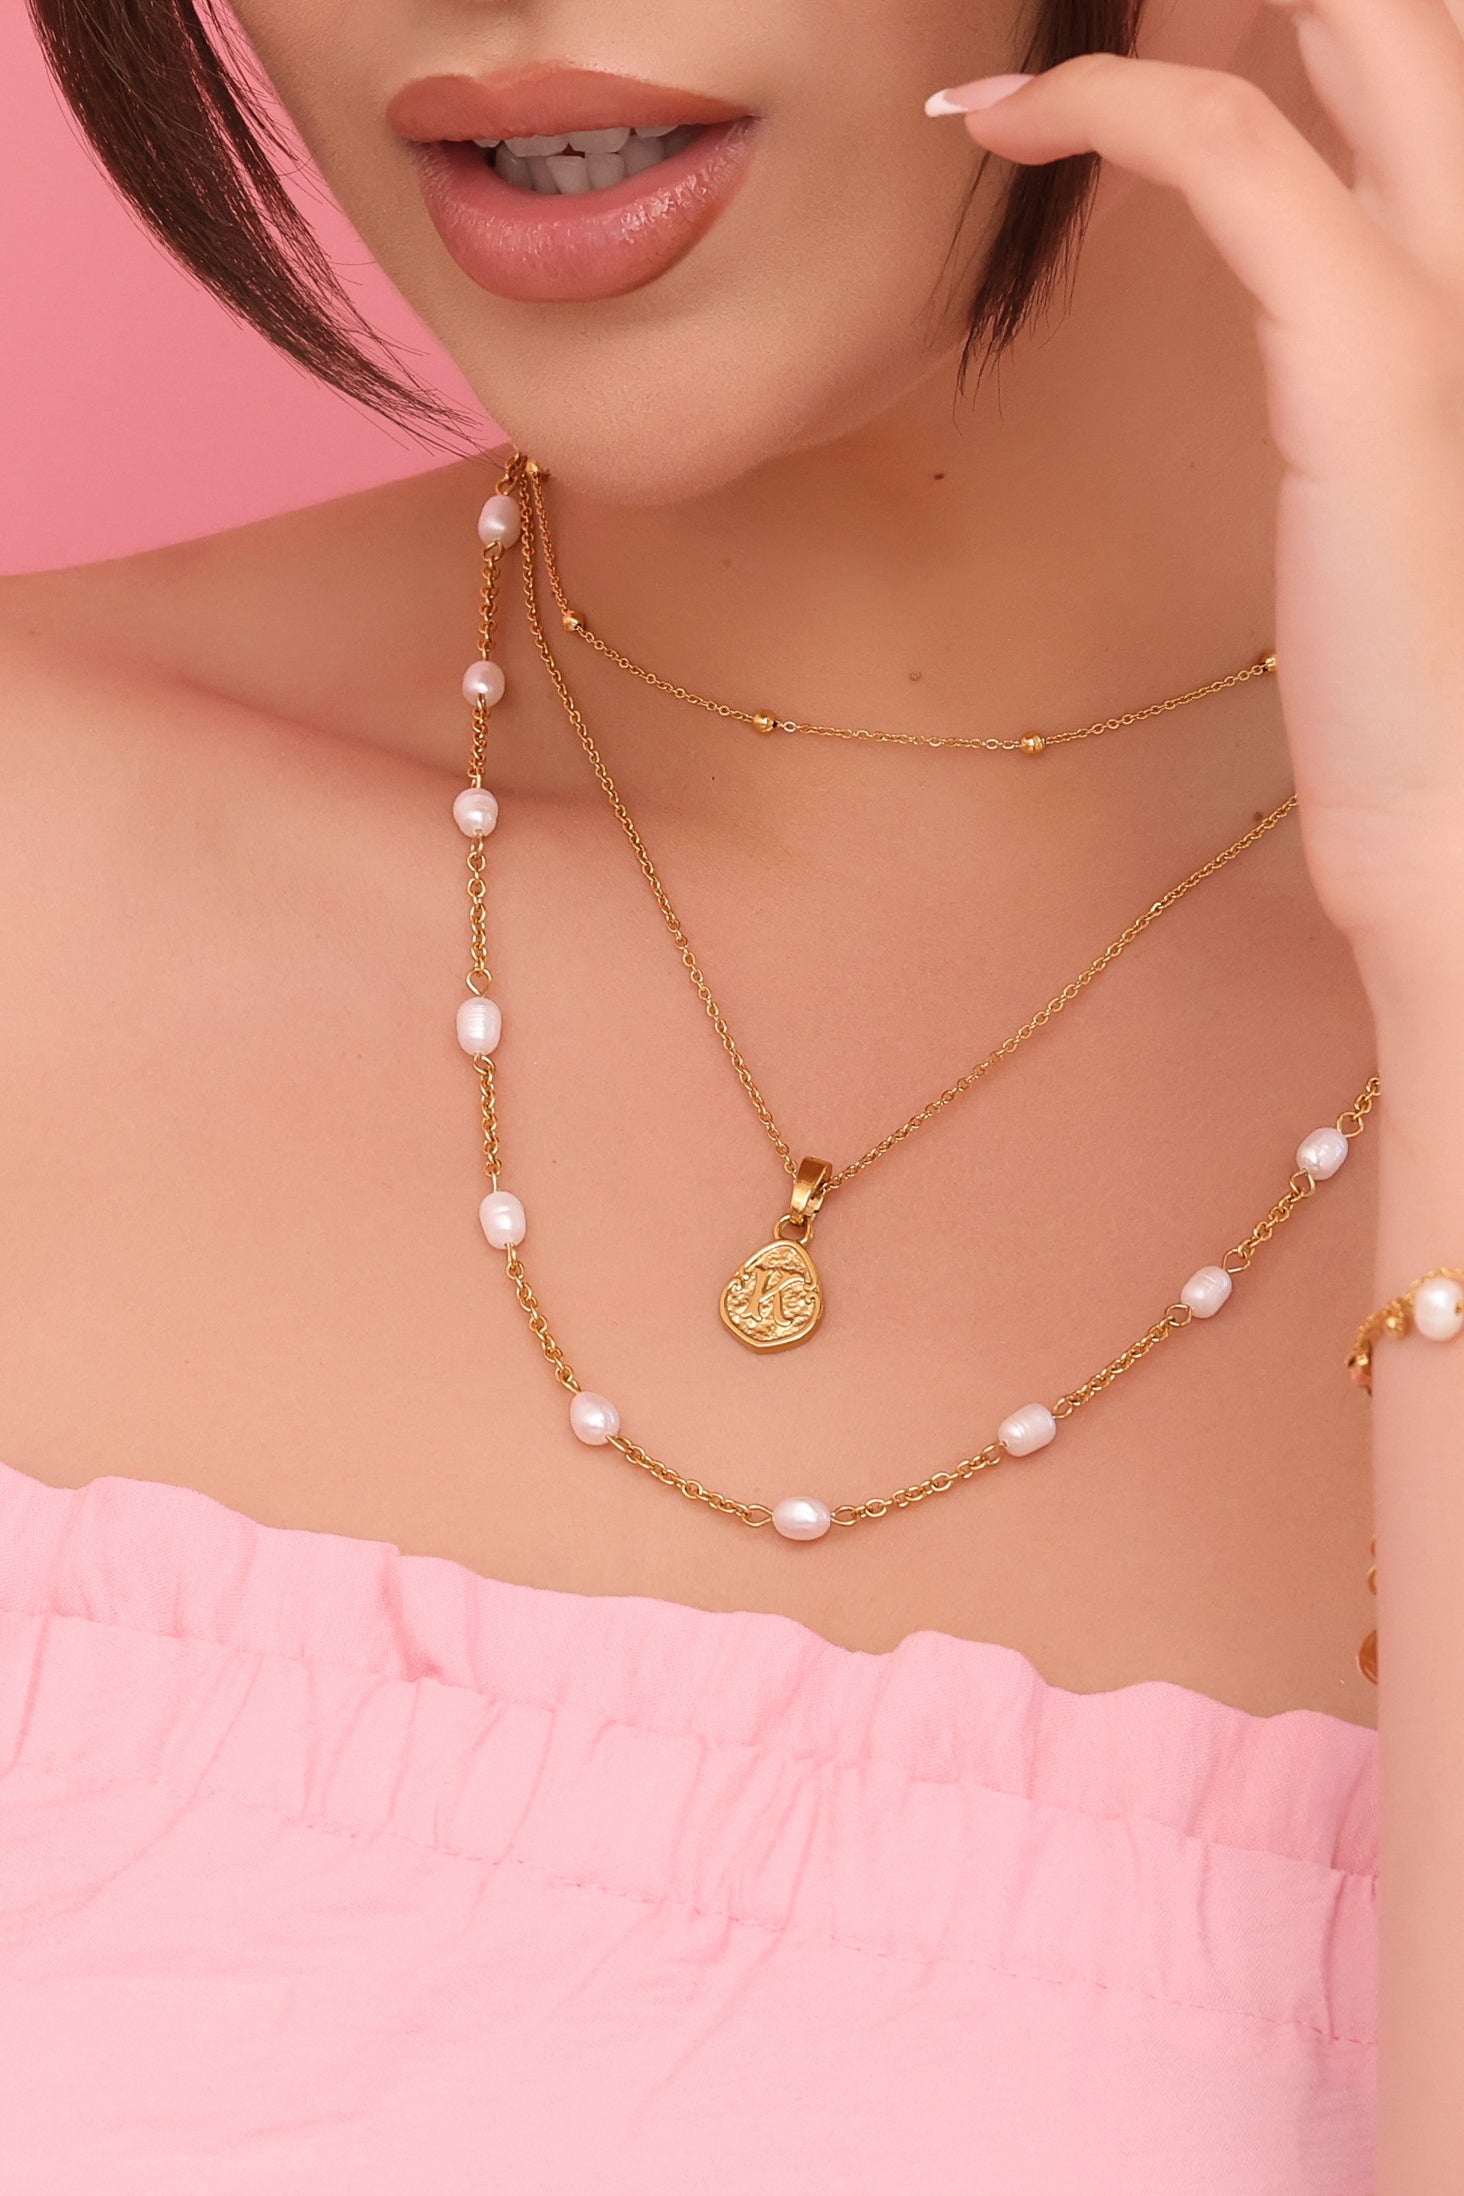 &quot;O&quot; Tberfil Letter Pendant with Petite Adjustable Chain Necklace